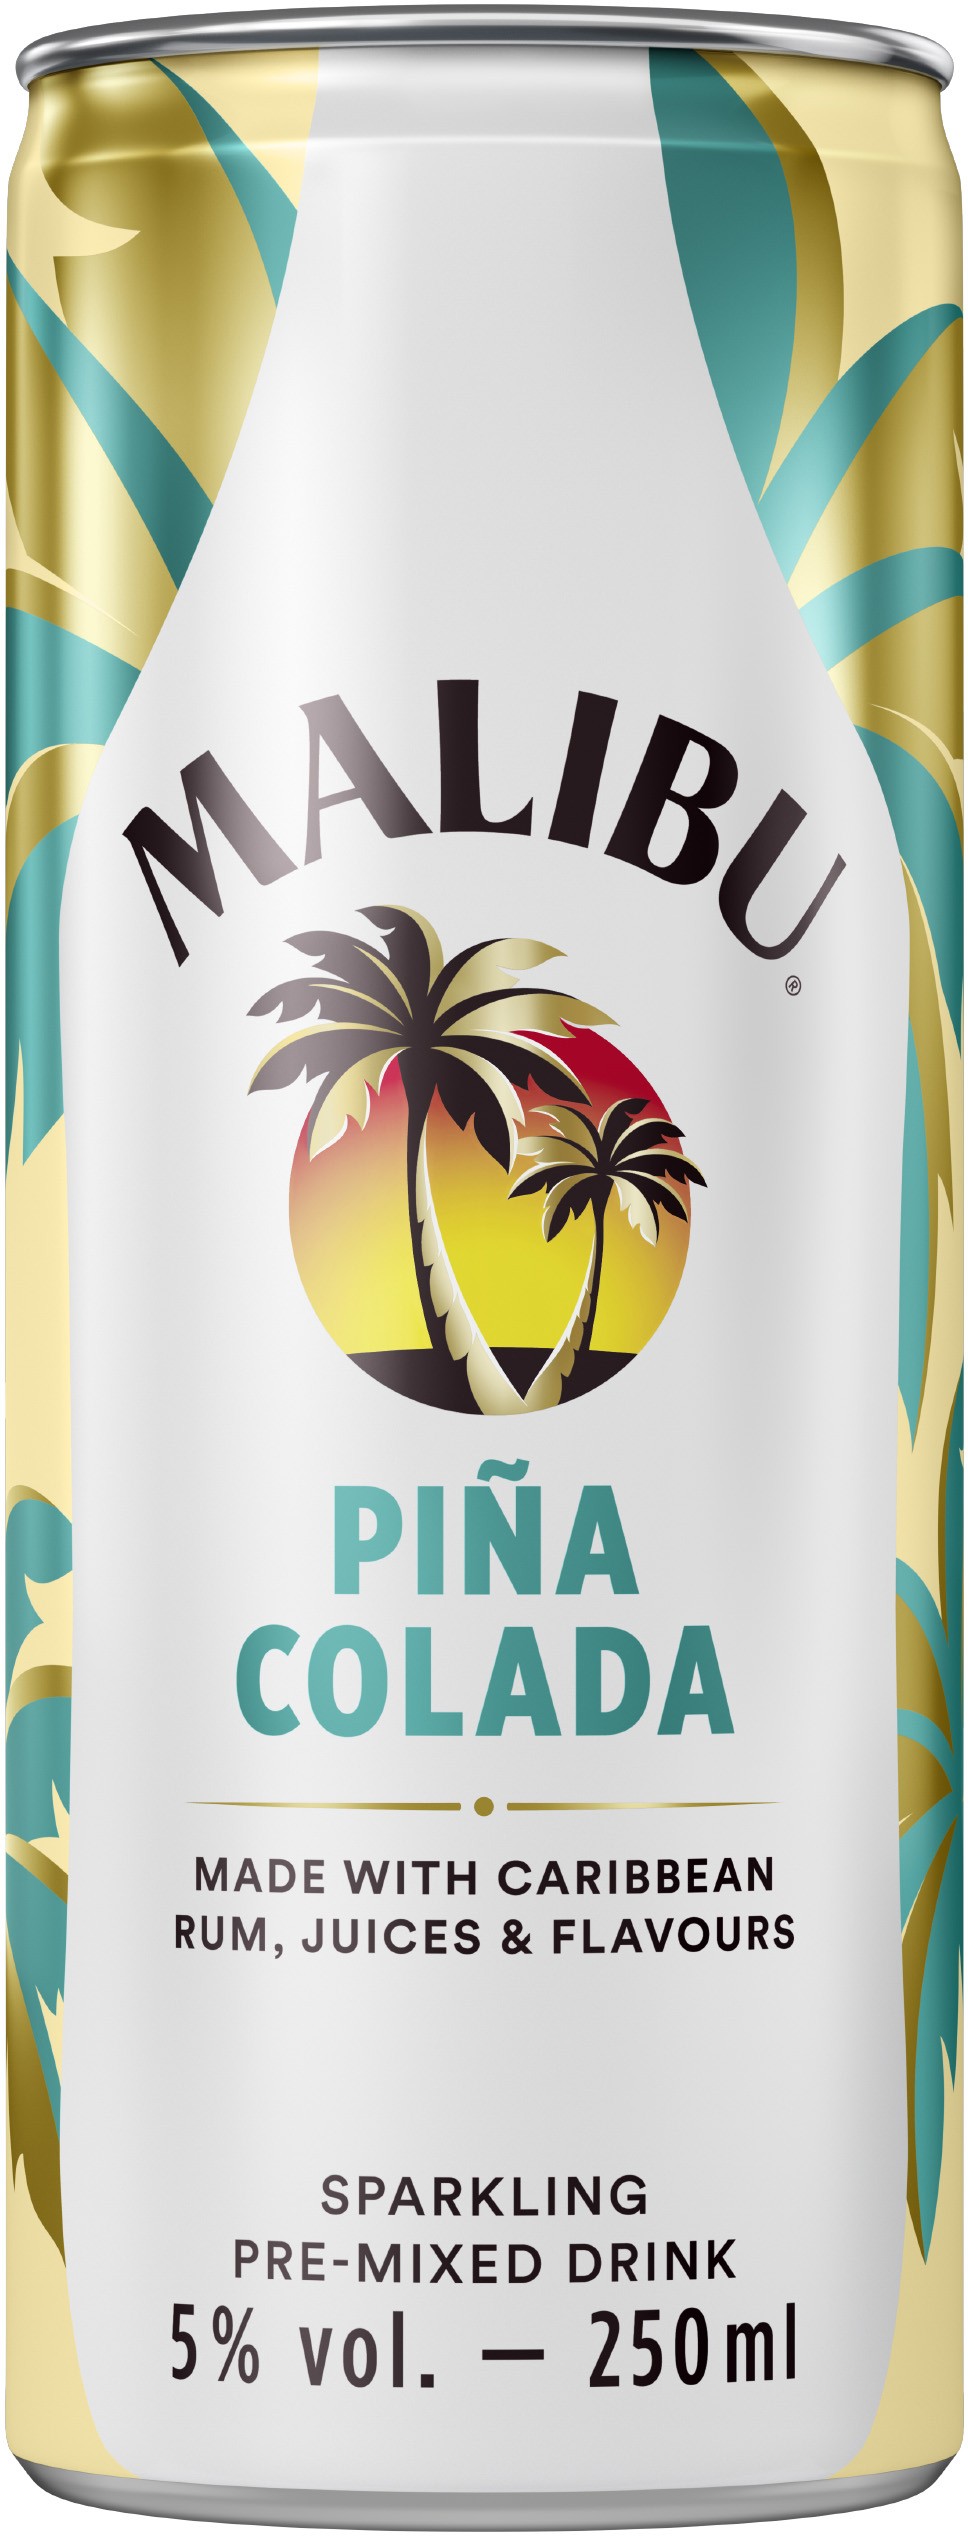 Pernod Ricard Malibu Piña Colada can